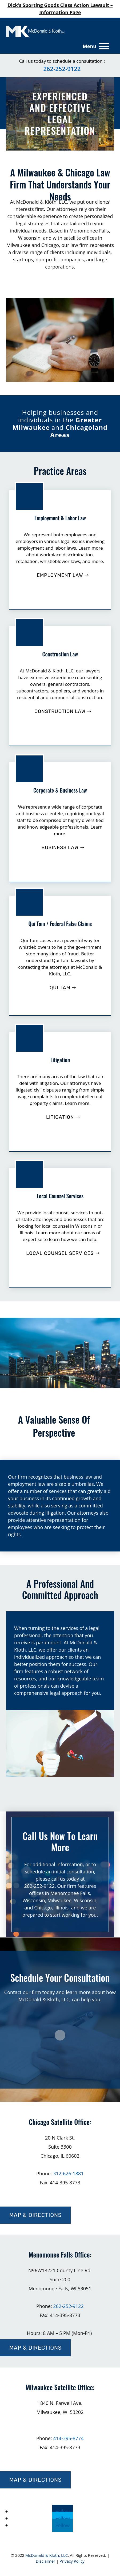 McDonald & Kloth - Chicago IL Lawyers